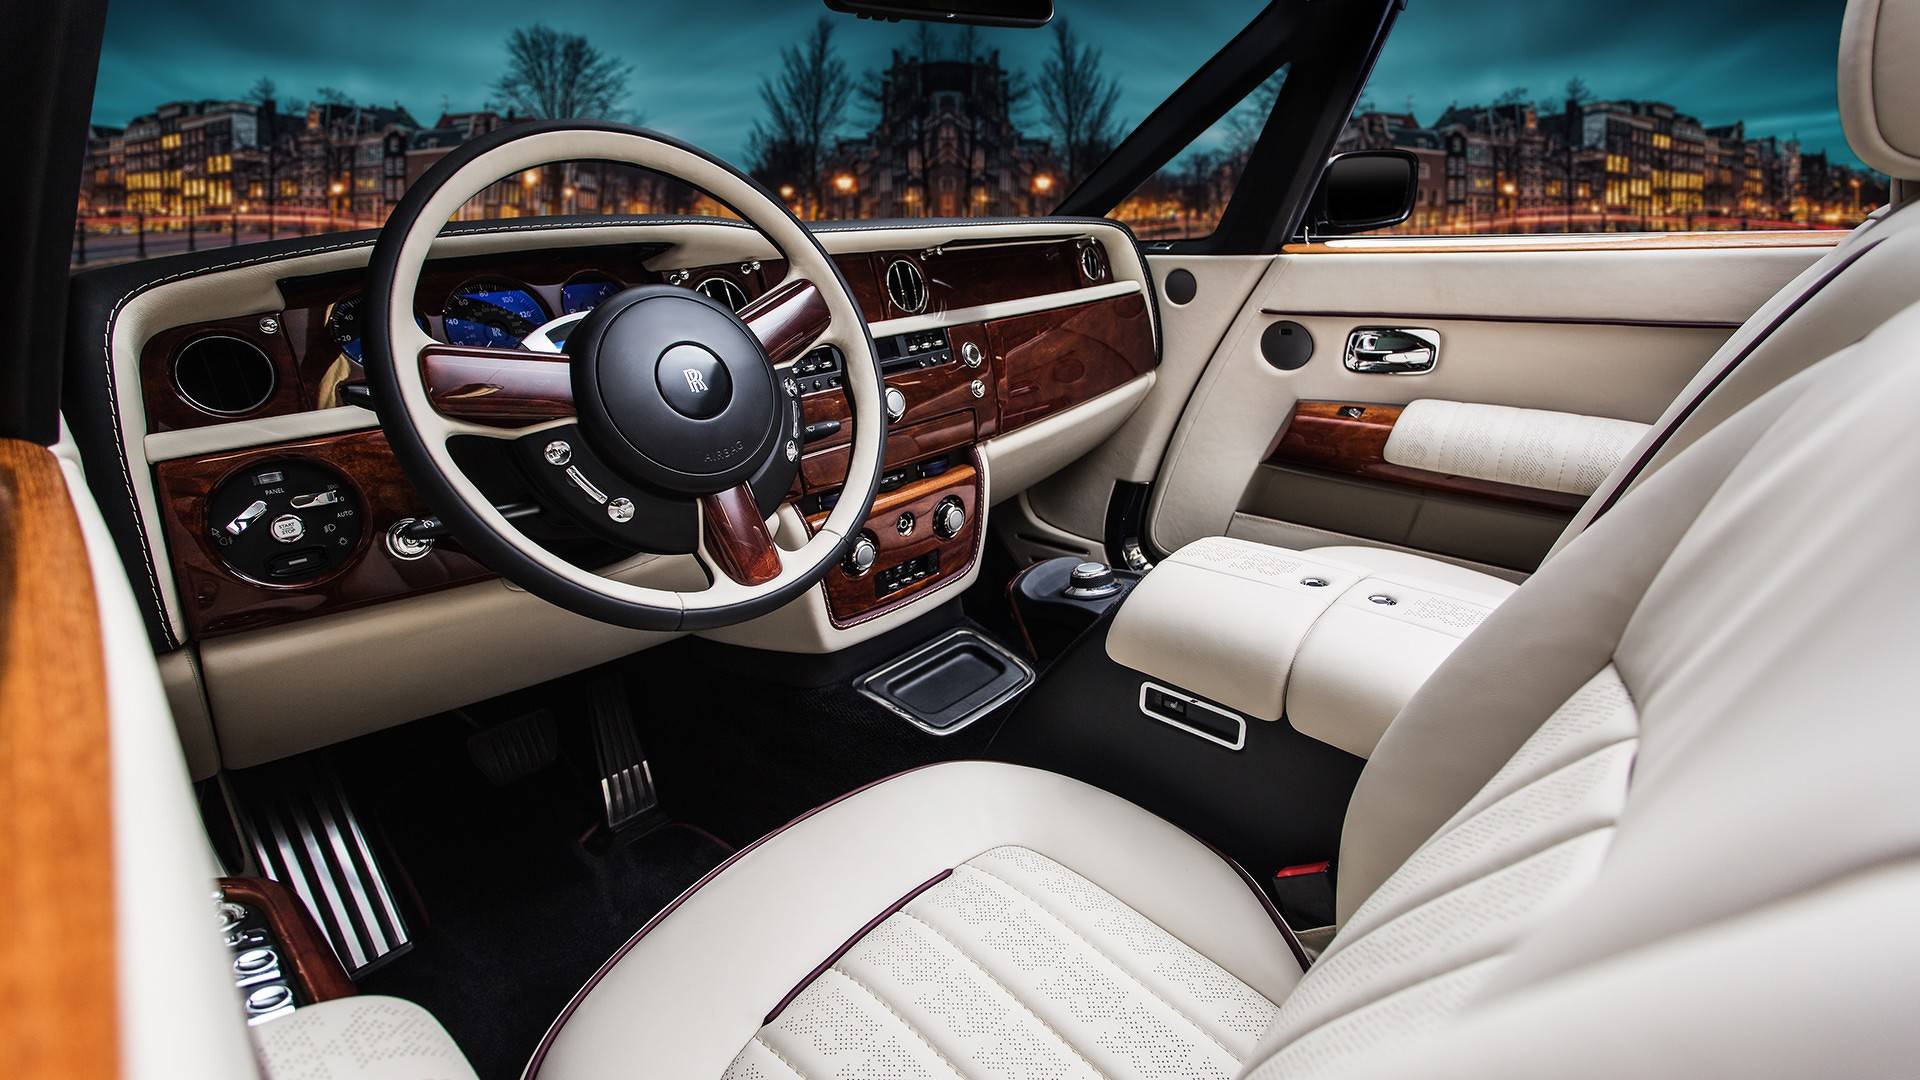 Rolls Royce Phantom Drophead Coupe By Vilner Is Truly Bespoke